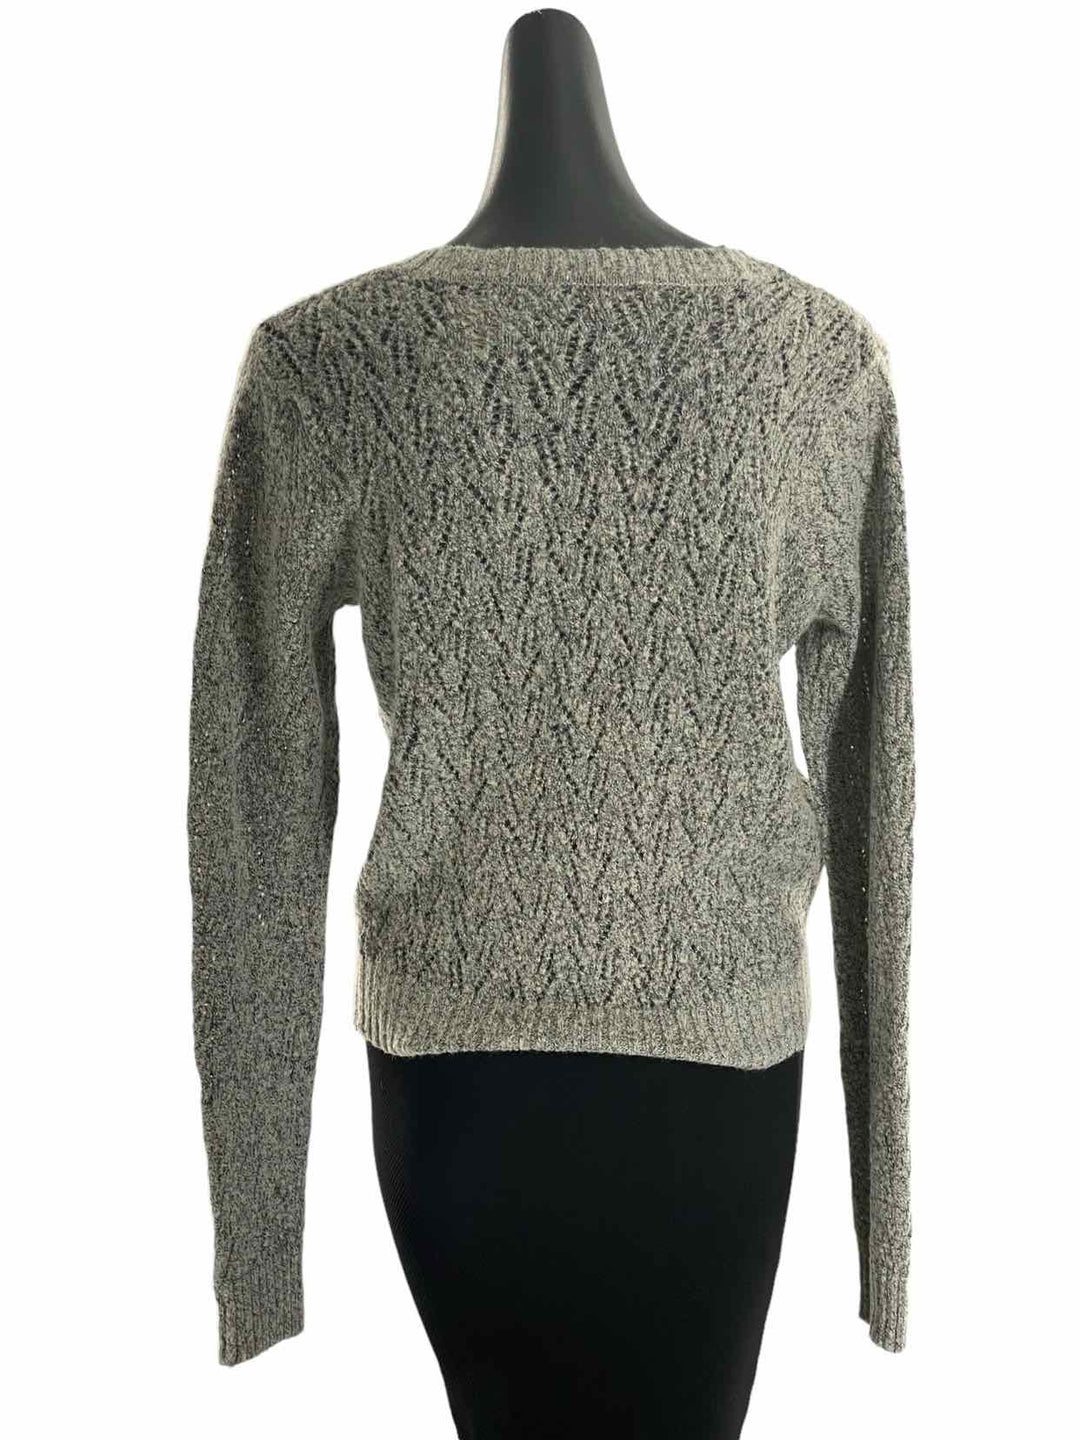 ILoveH81 Size L Gray Cardigan Sweater